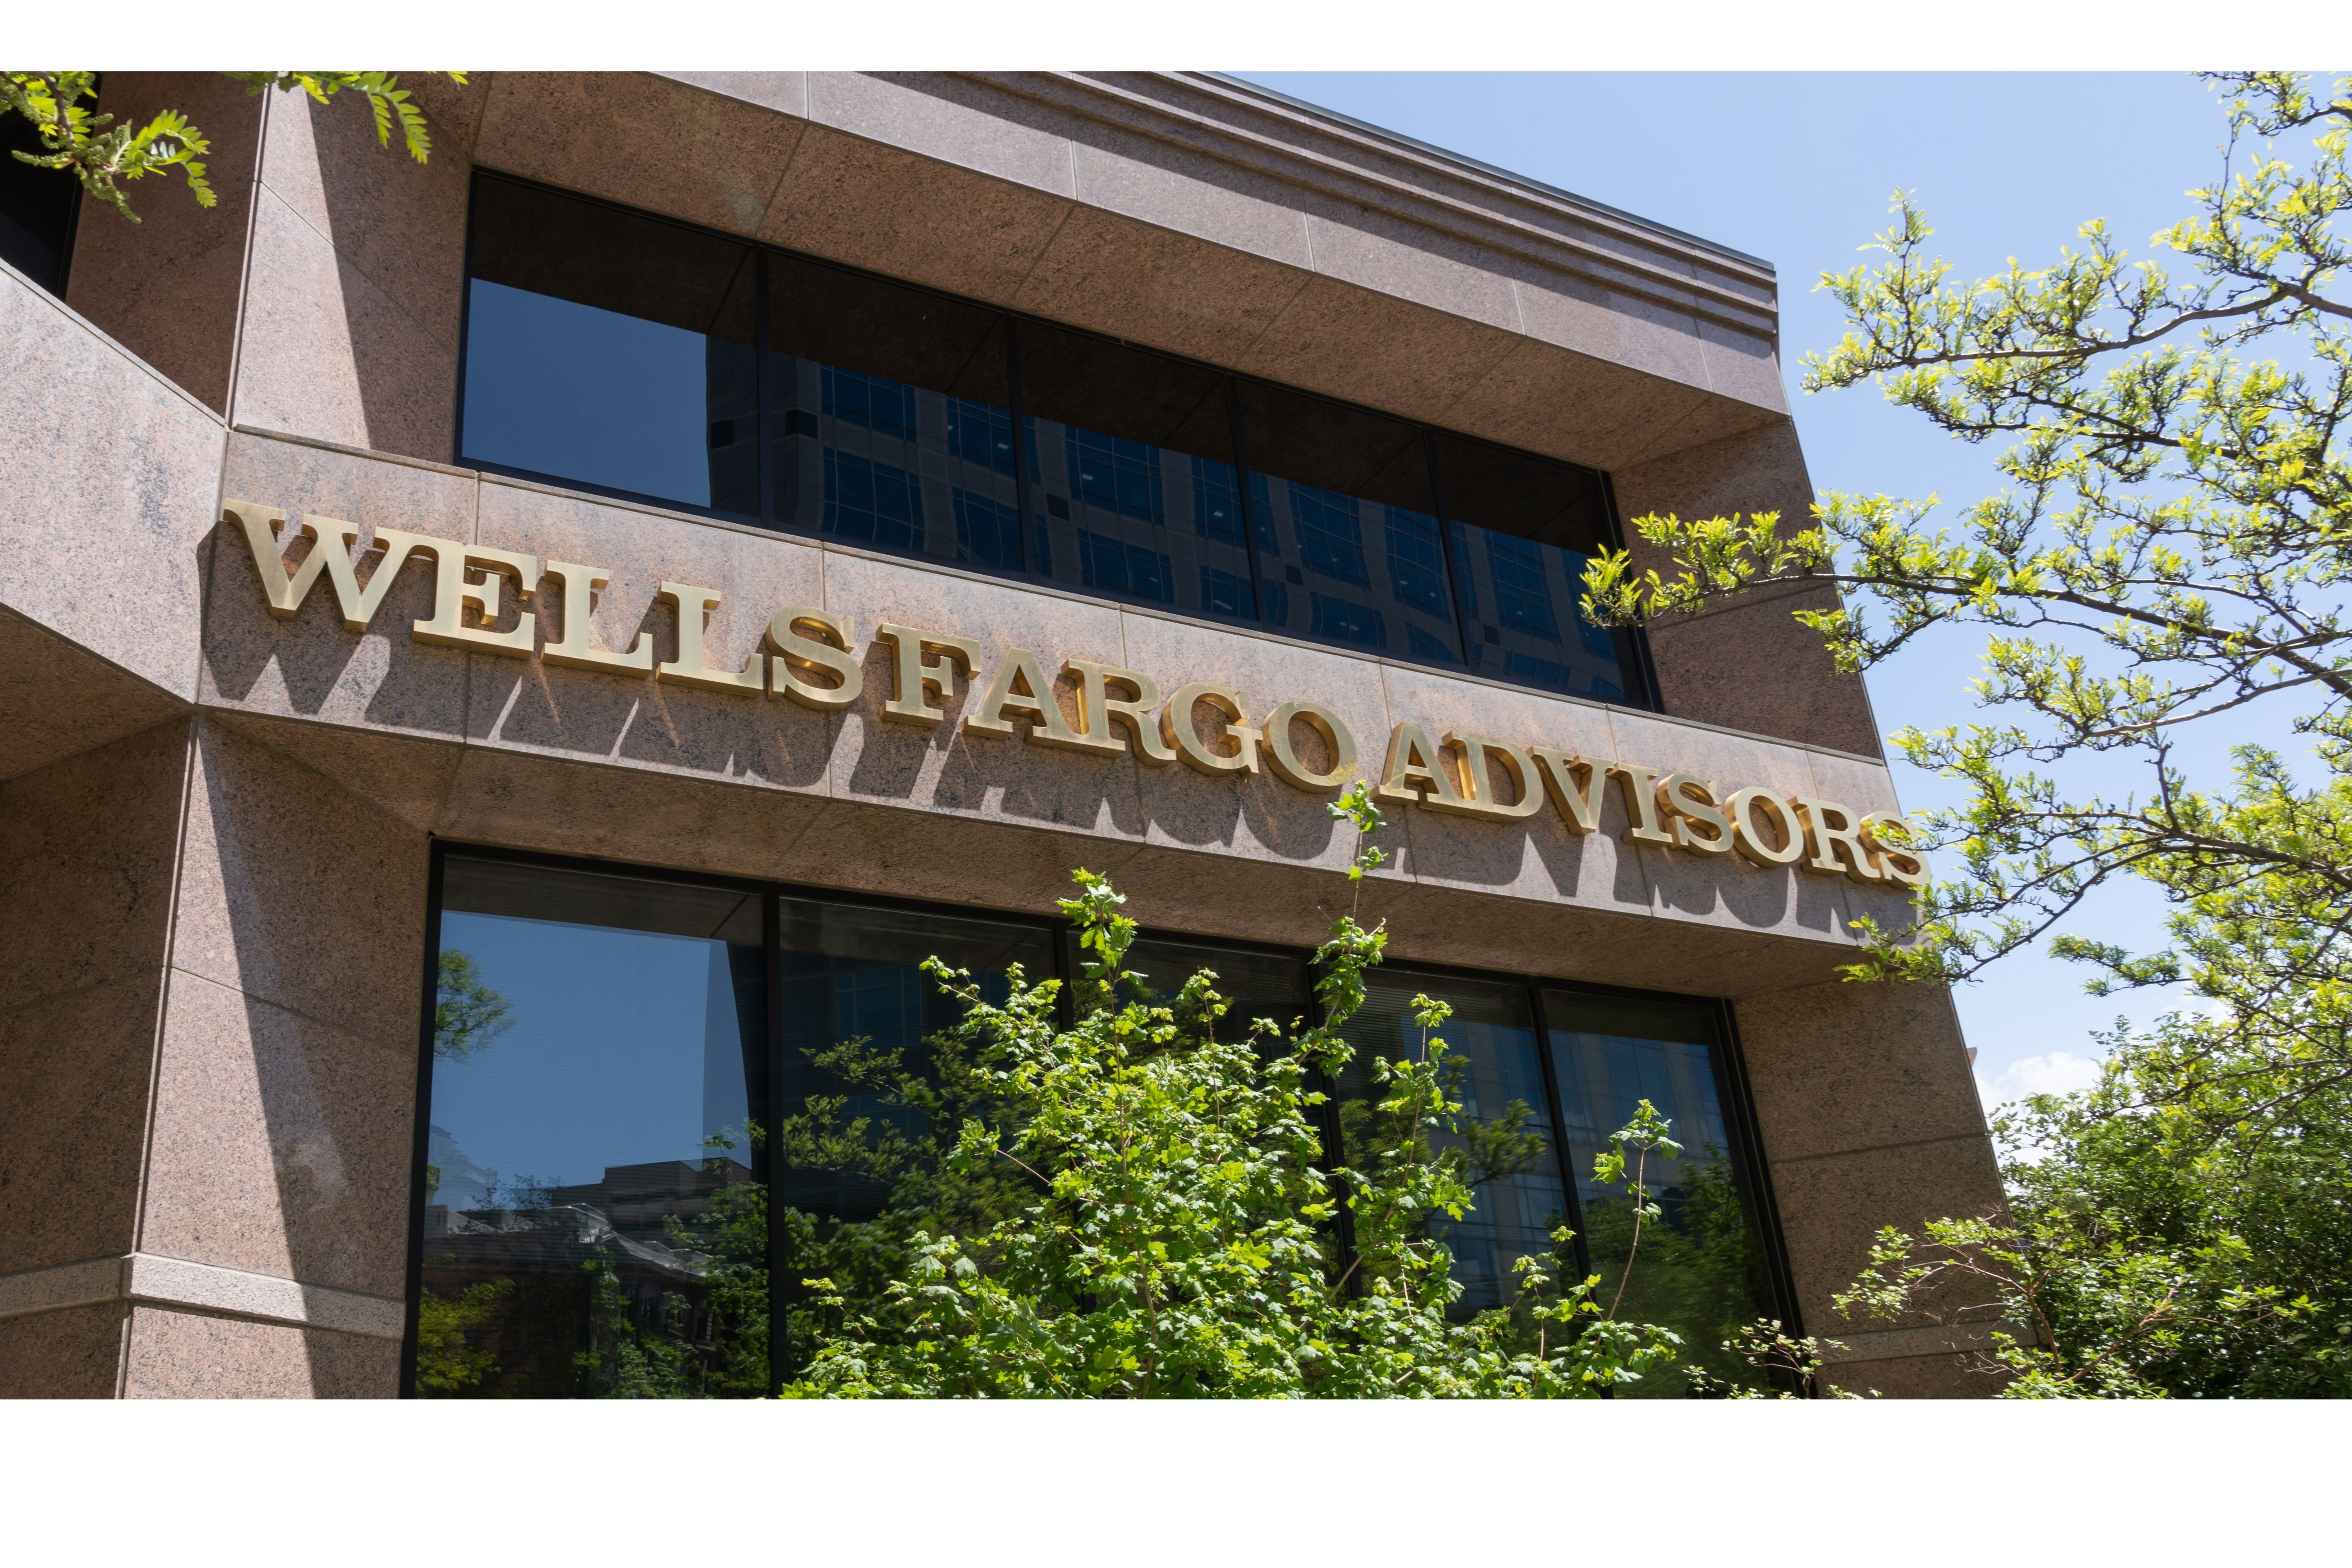 Close up of Wells Fargo Advisors sign on the building in Salt Lake City, UT, USA - May 11, 2023. Wells Fargo Advisors is a subsidiary of Wells Fargo.